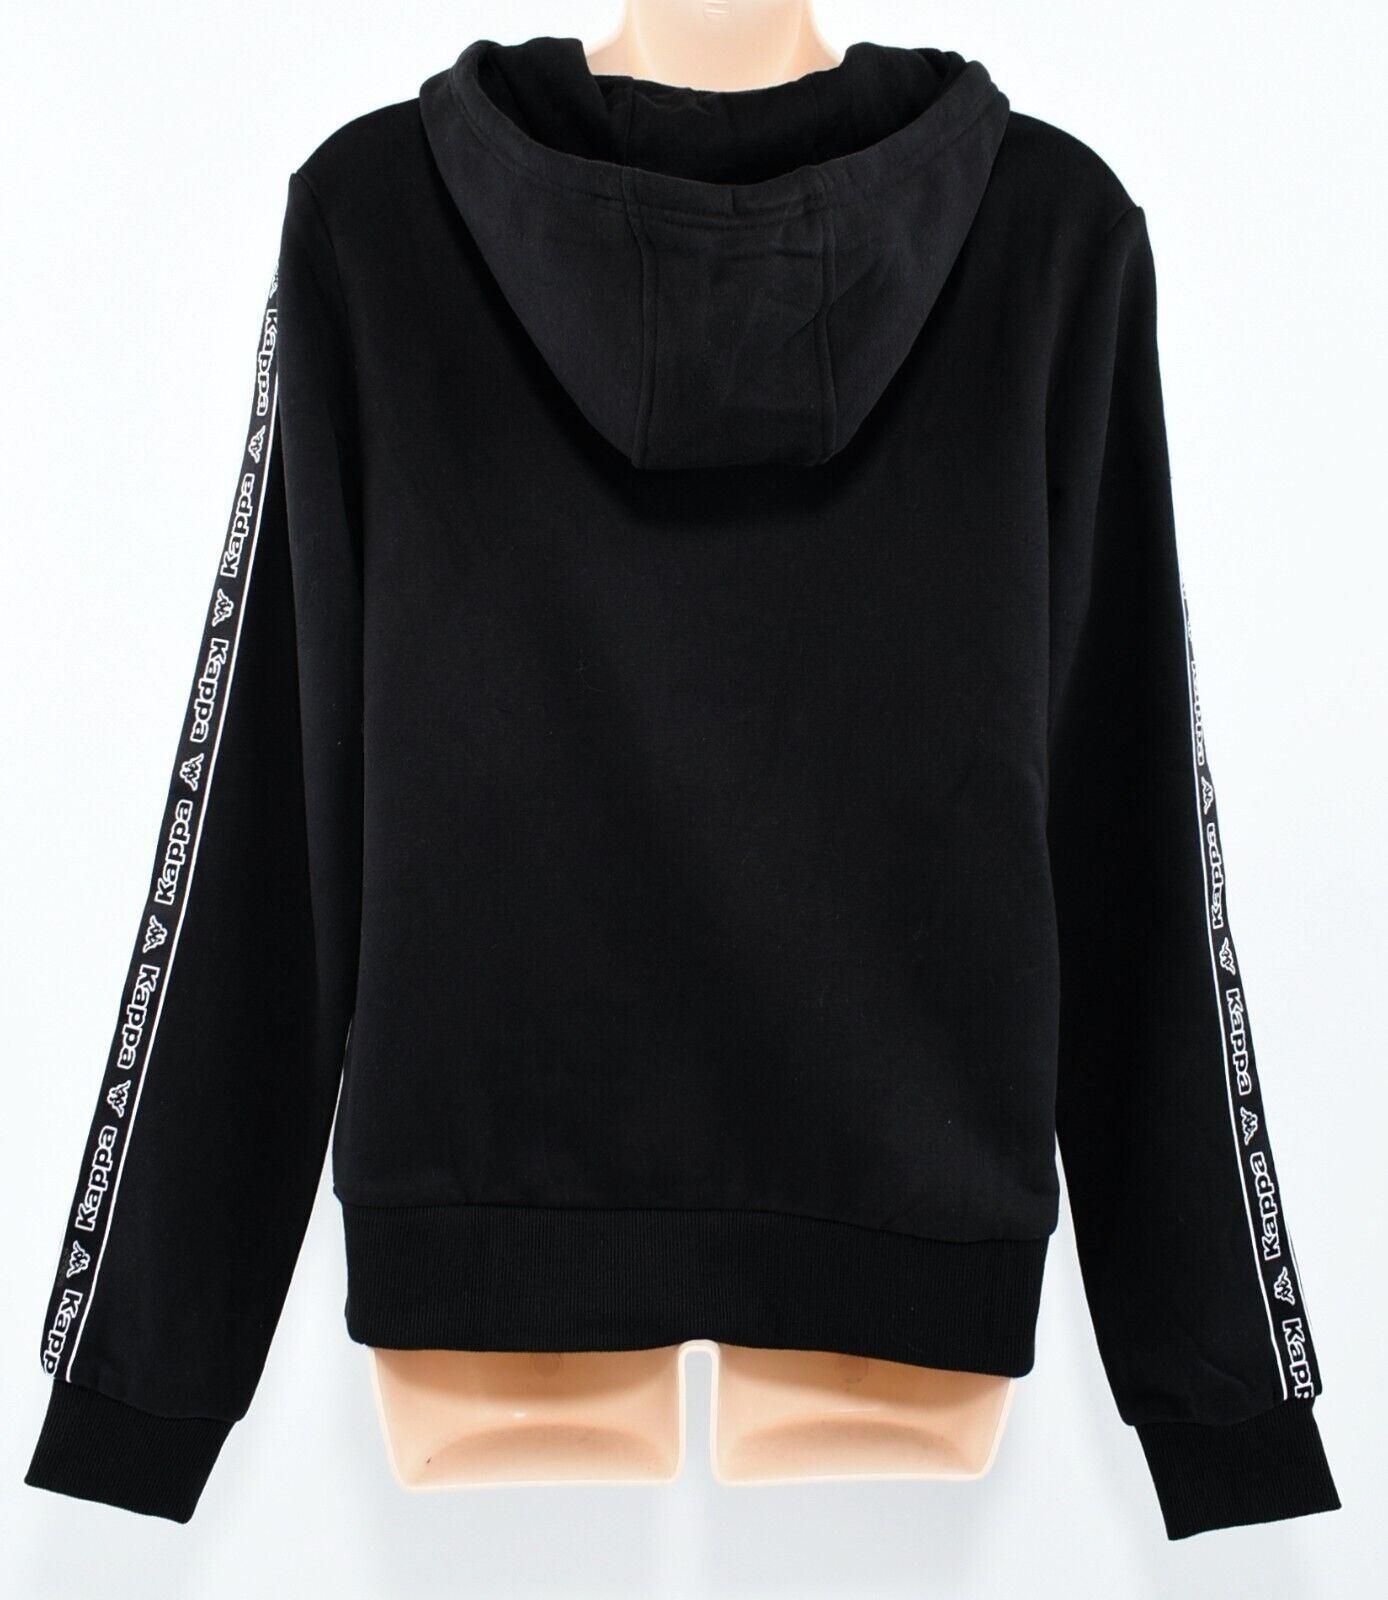 KAPPA Women's Full Zip Hoodie Jacket Sweatshirt, Black, size XS (UK 8)